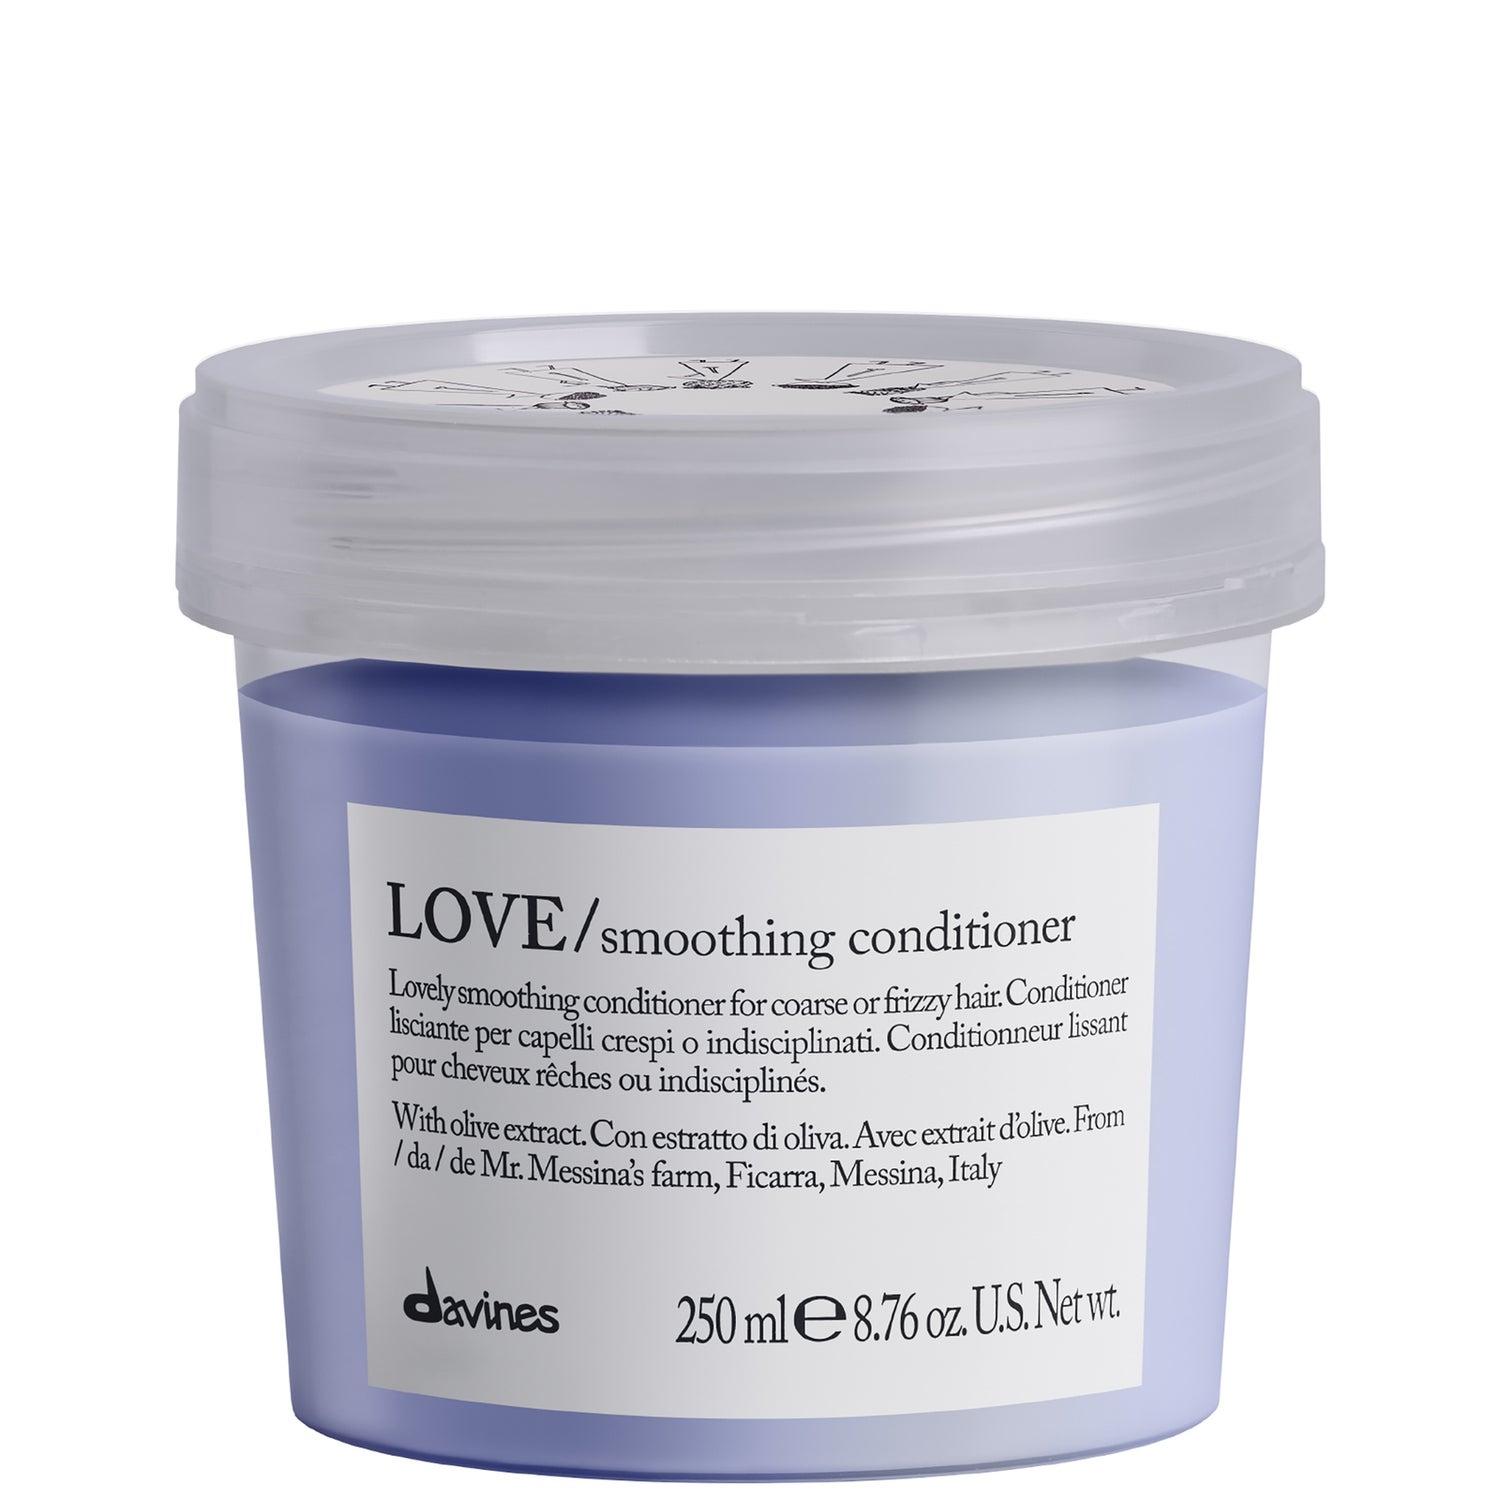 Davines Love/ Smoothing Conditioner 250ml